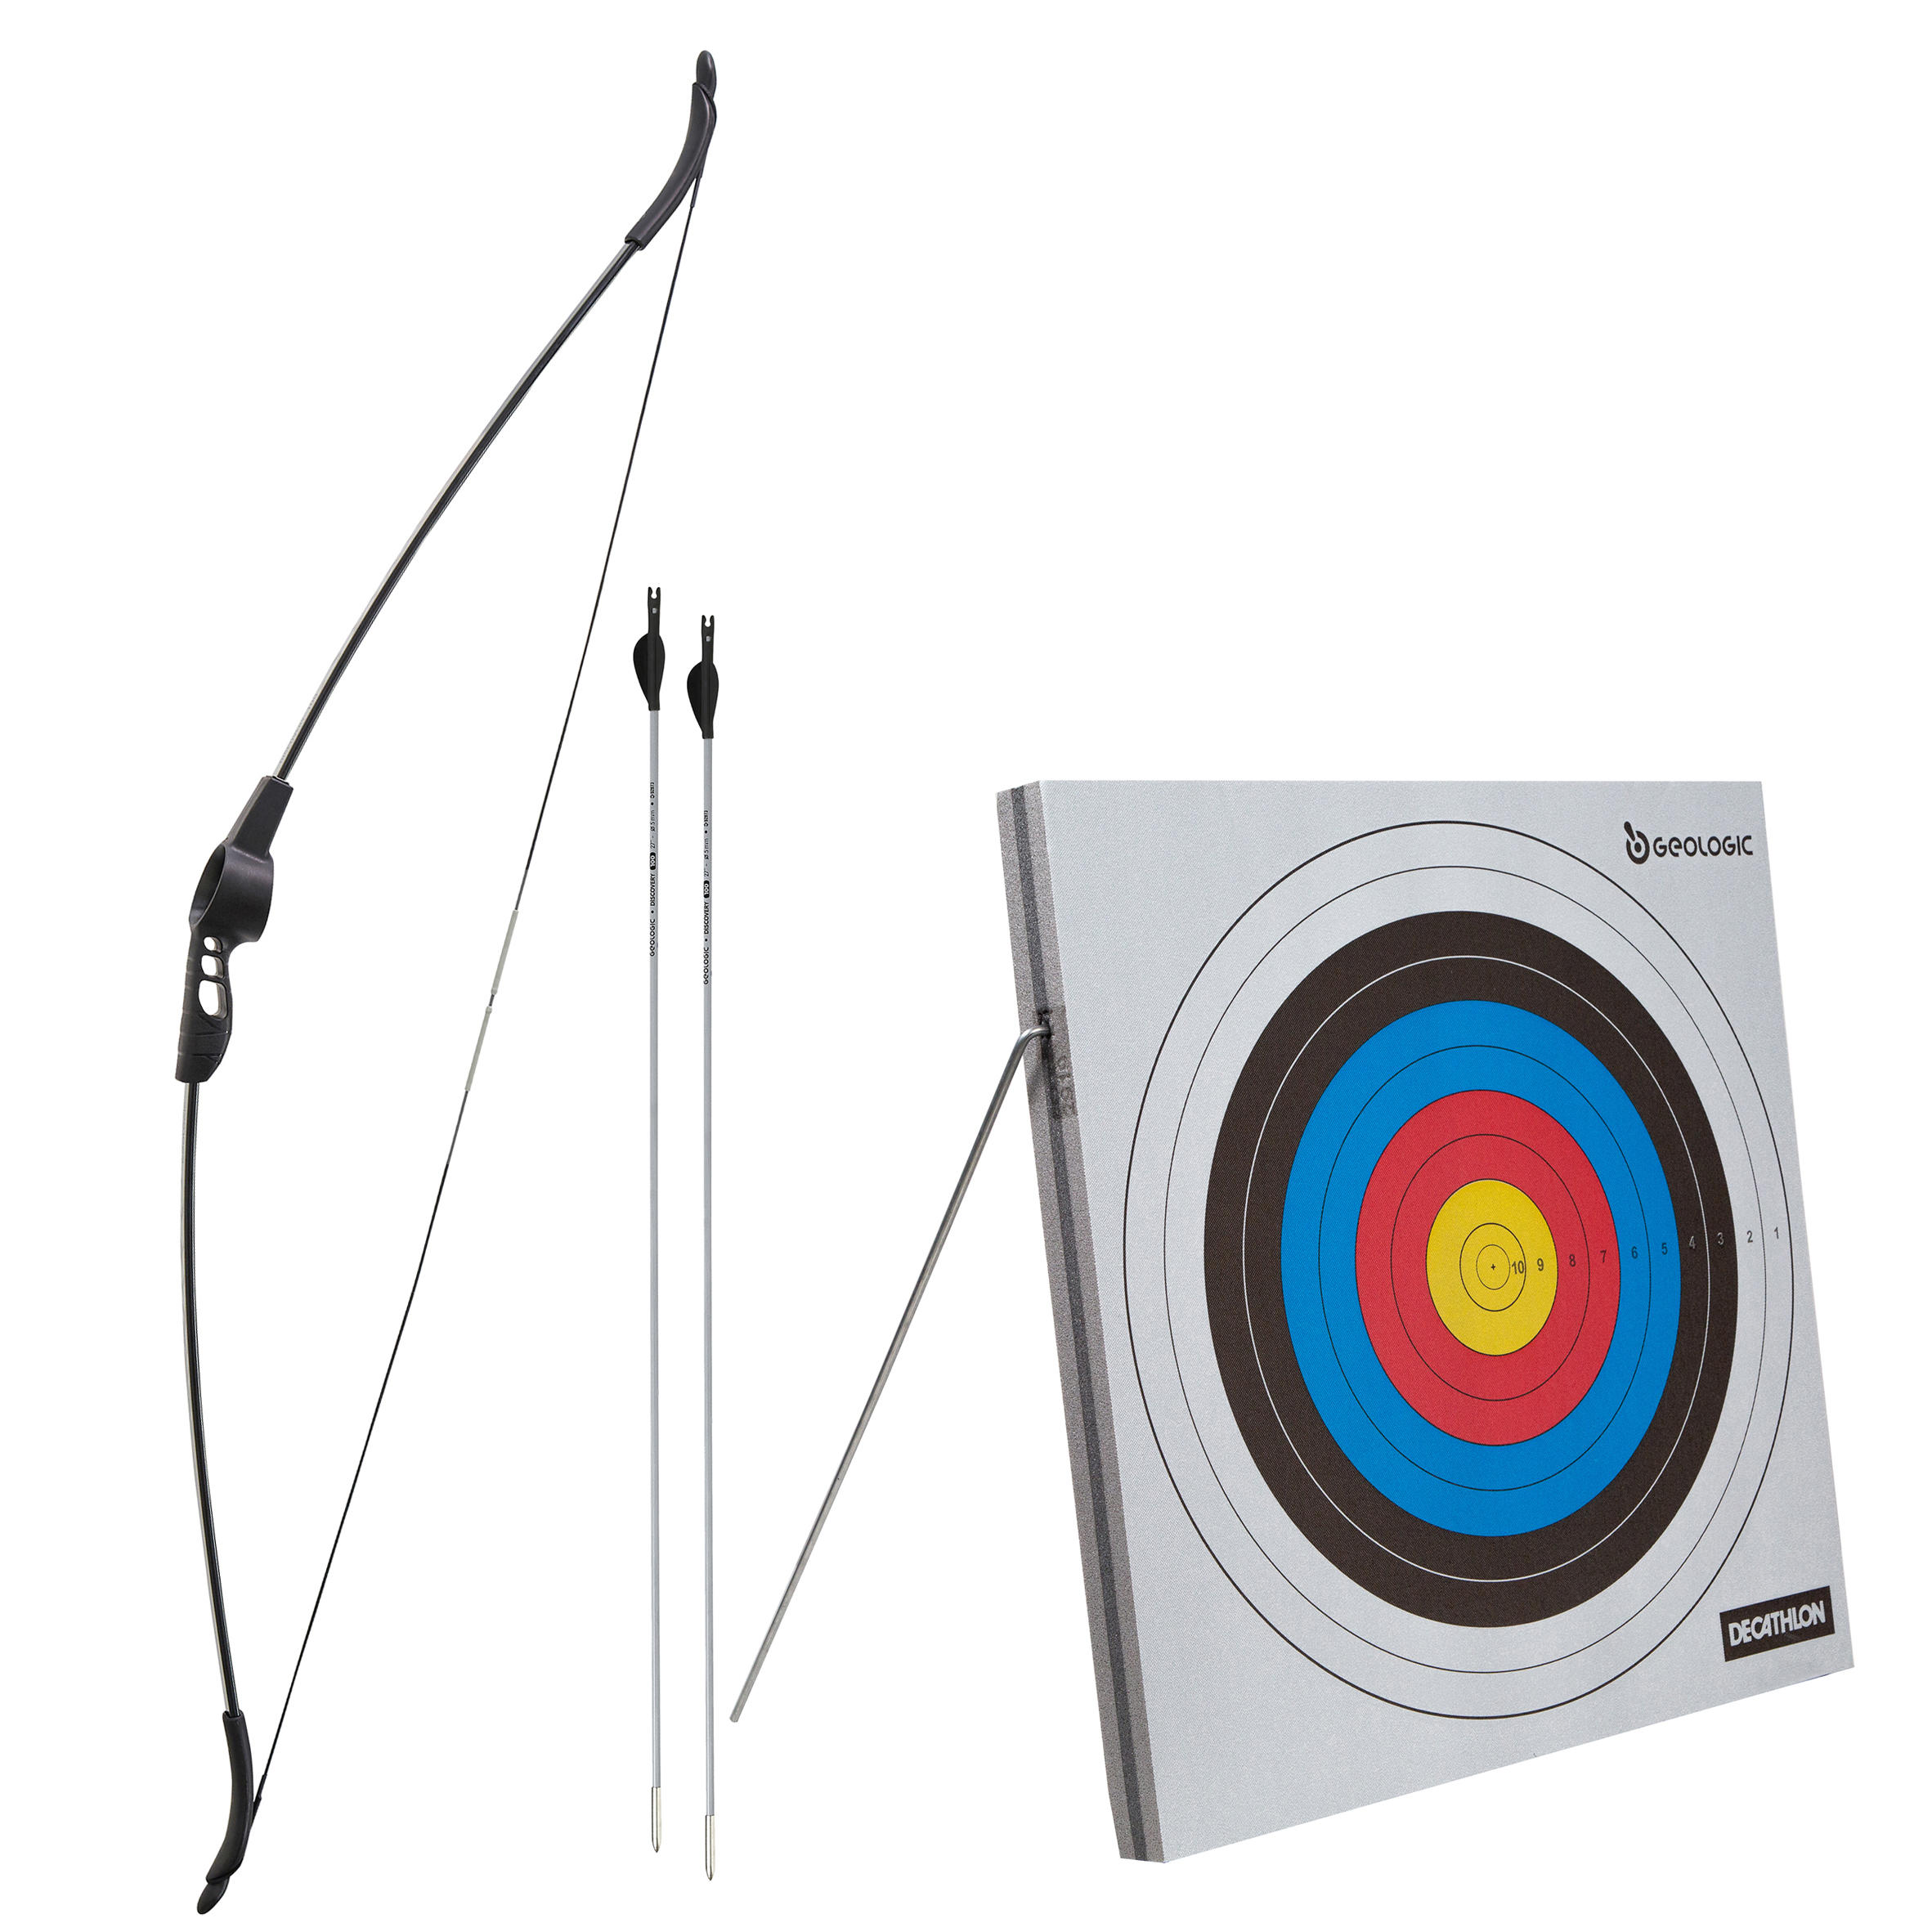 arrows archery kit